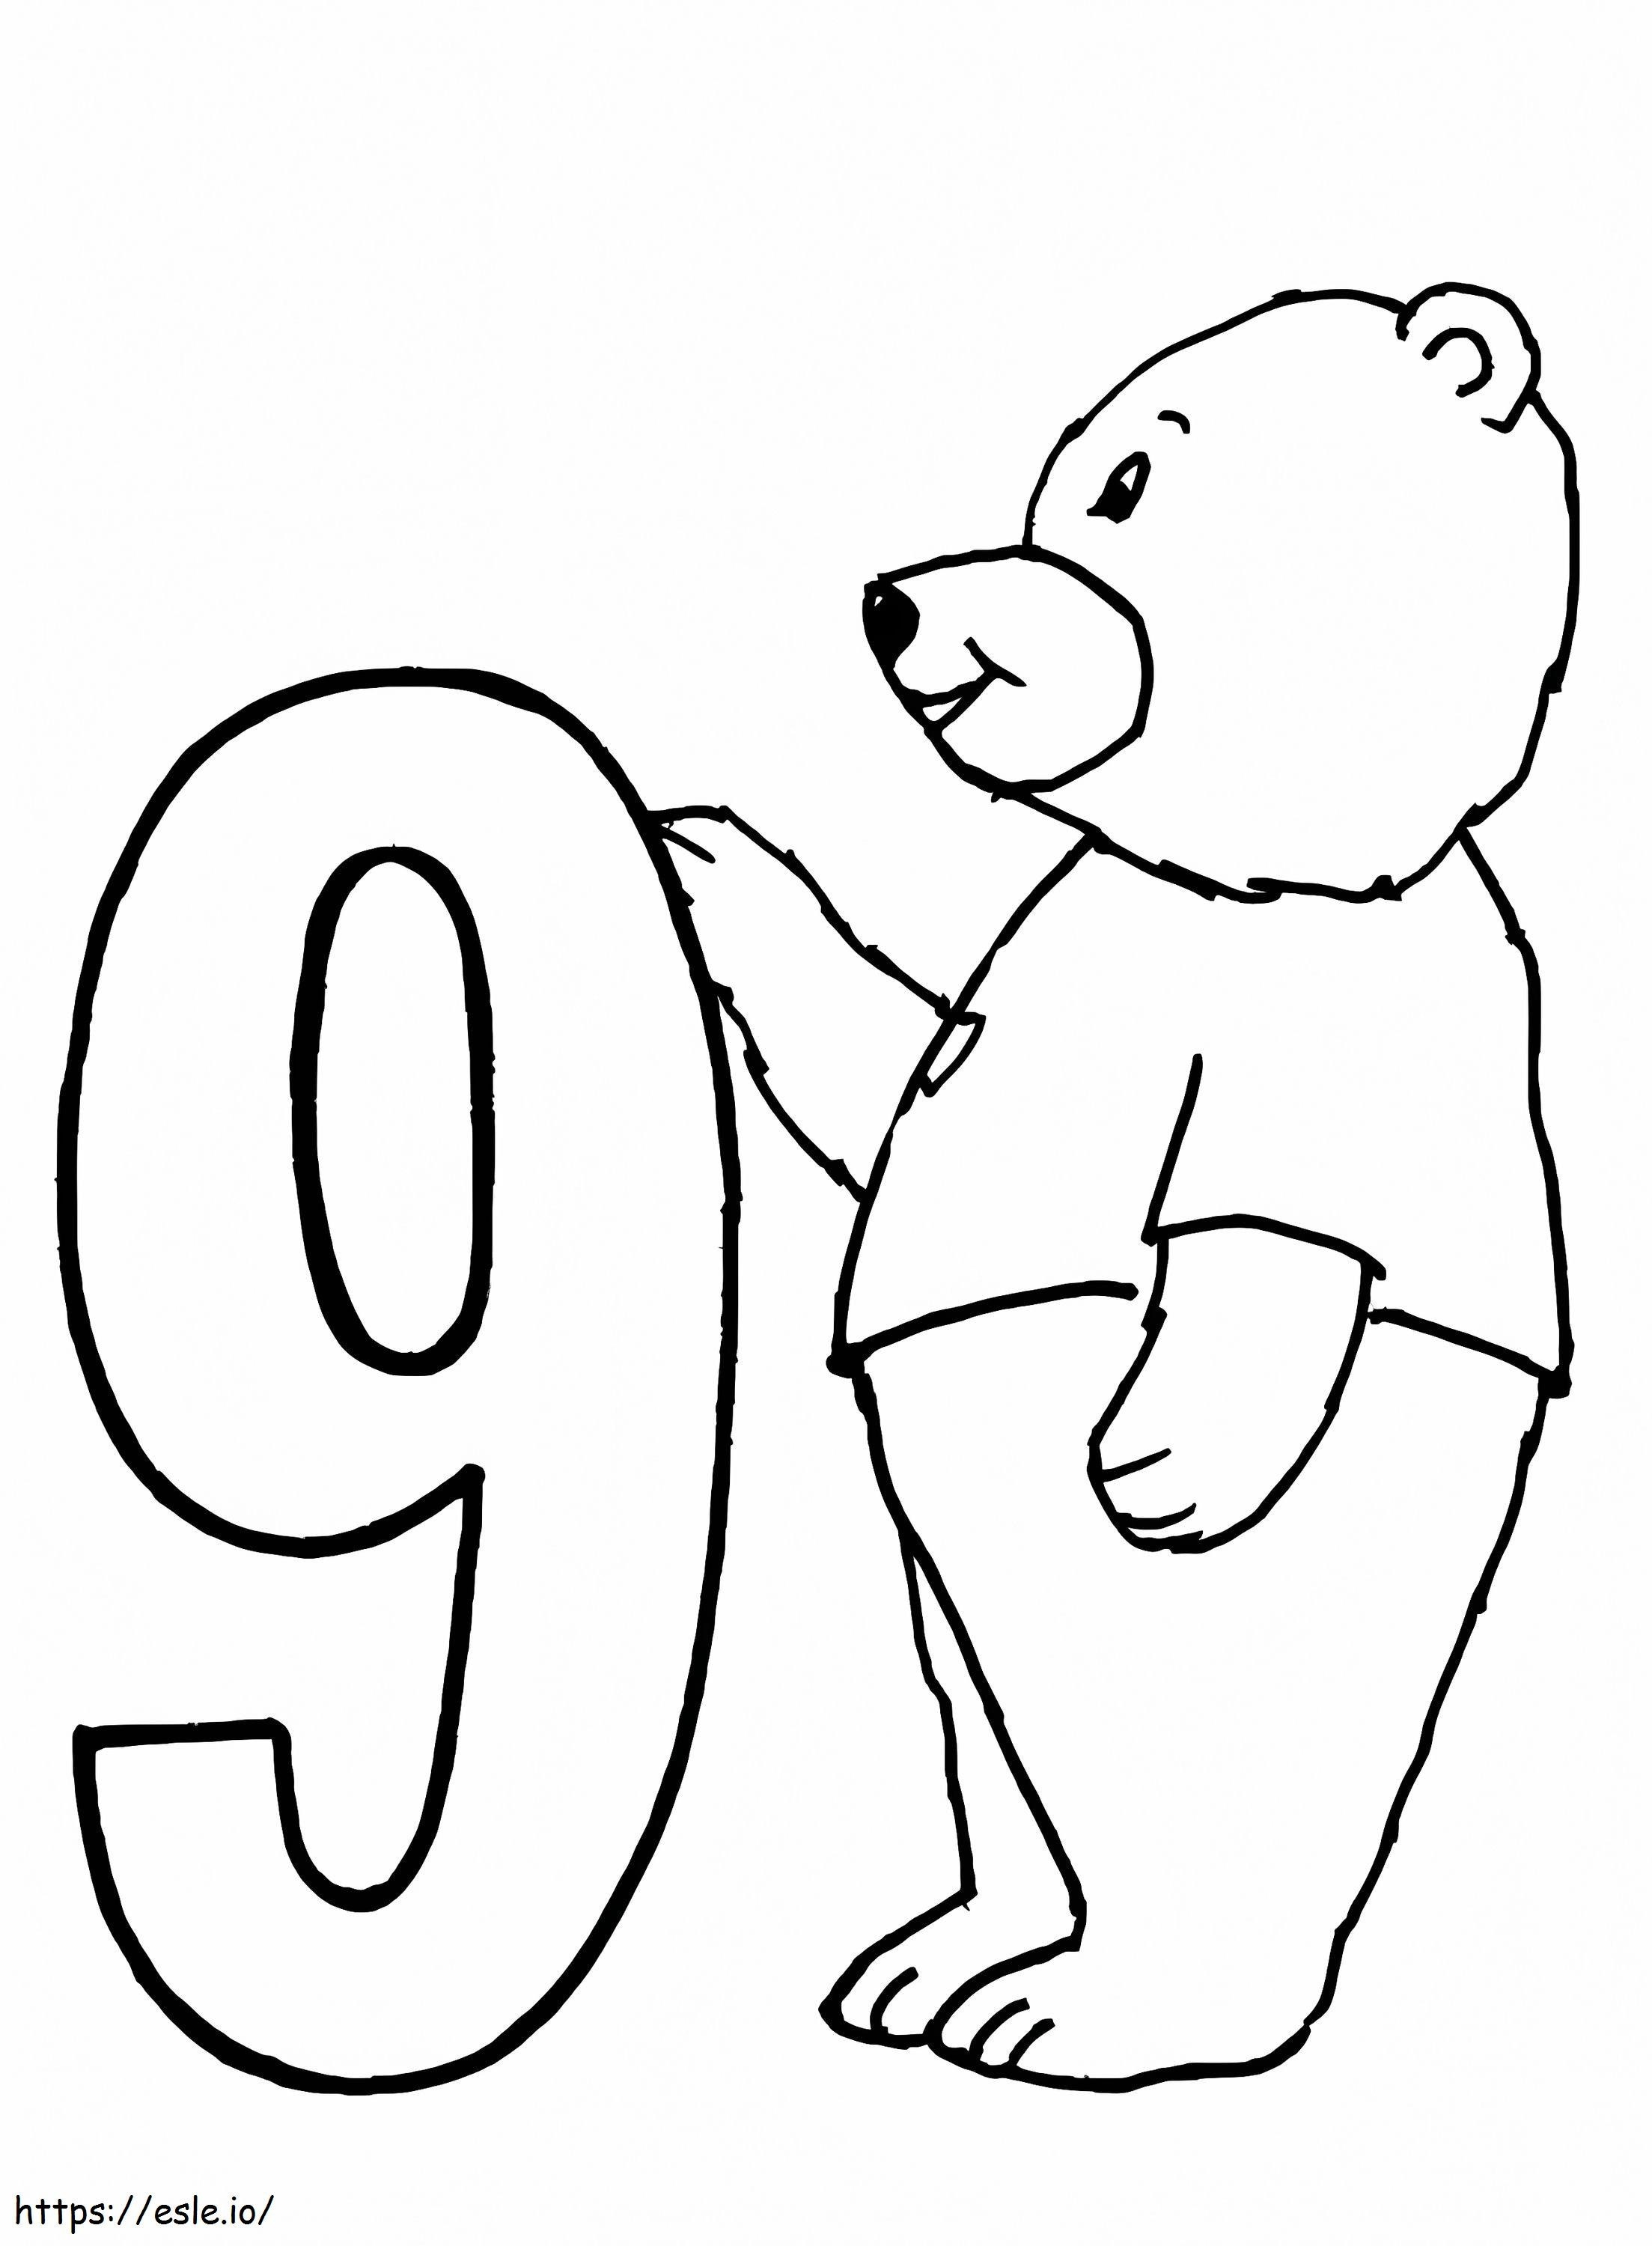 Urso e número 9 para colorir